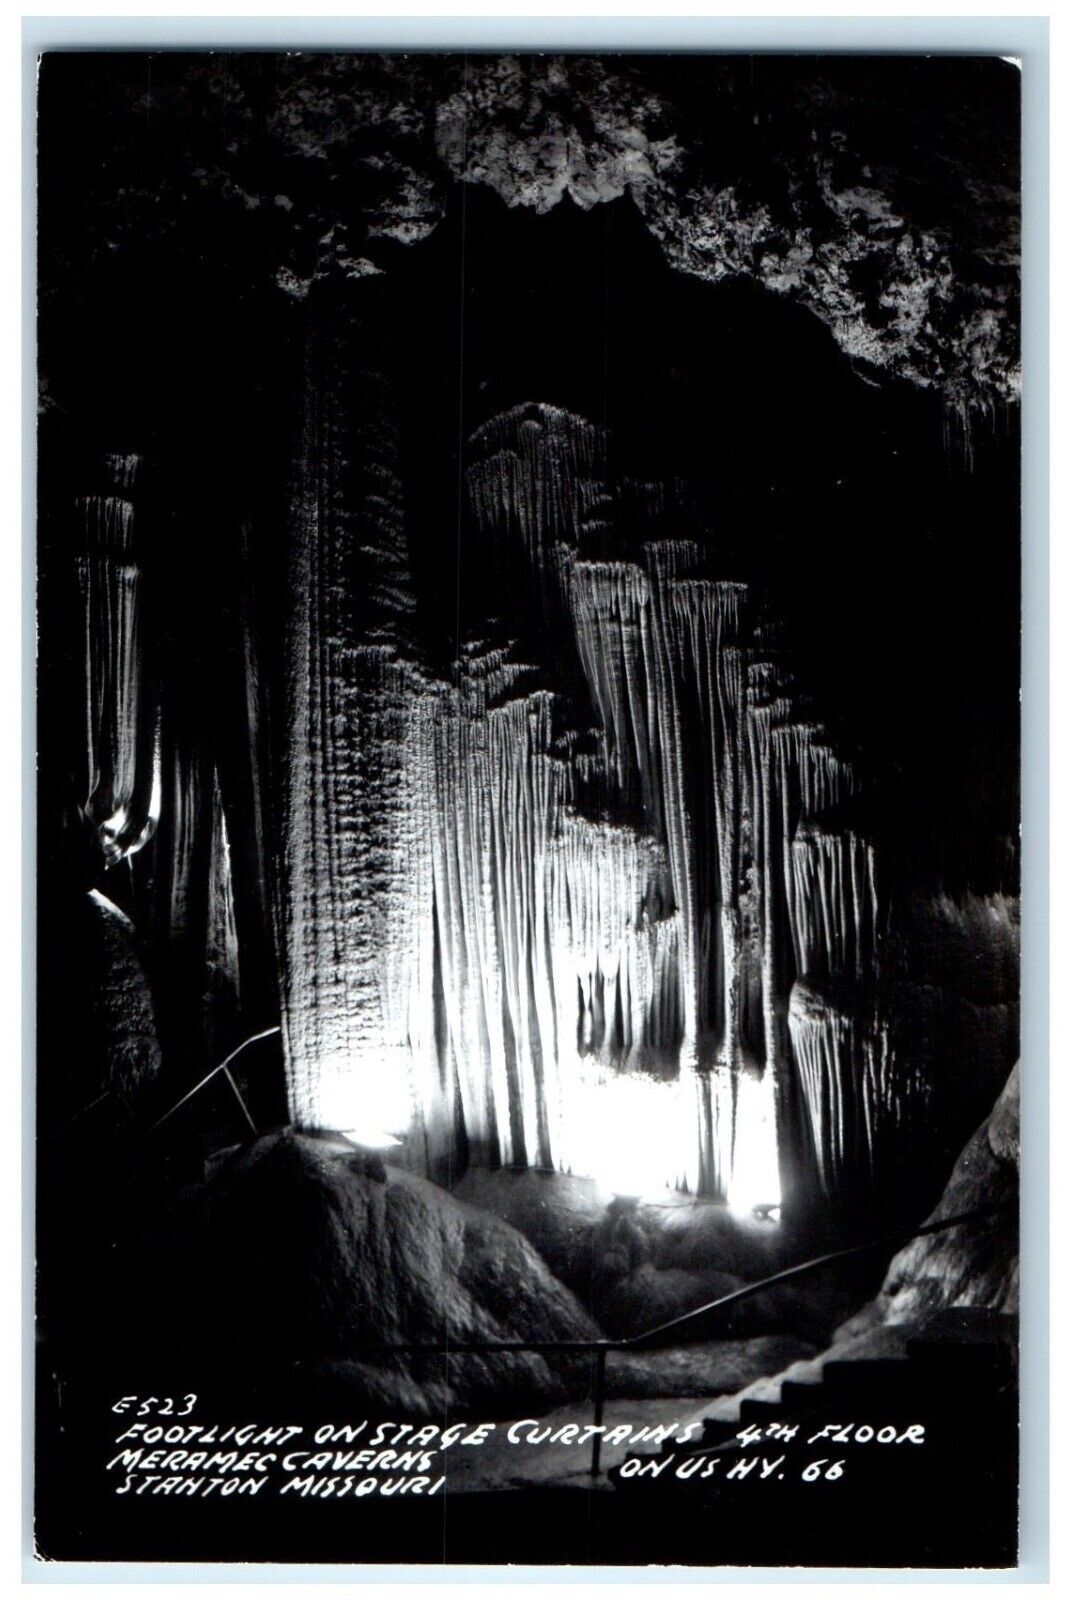 c1940's Footlight On Stage Curtain 4Th Floor Meramec Caverns RPPC Photo Postcard